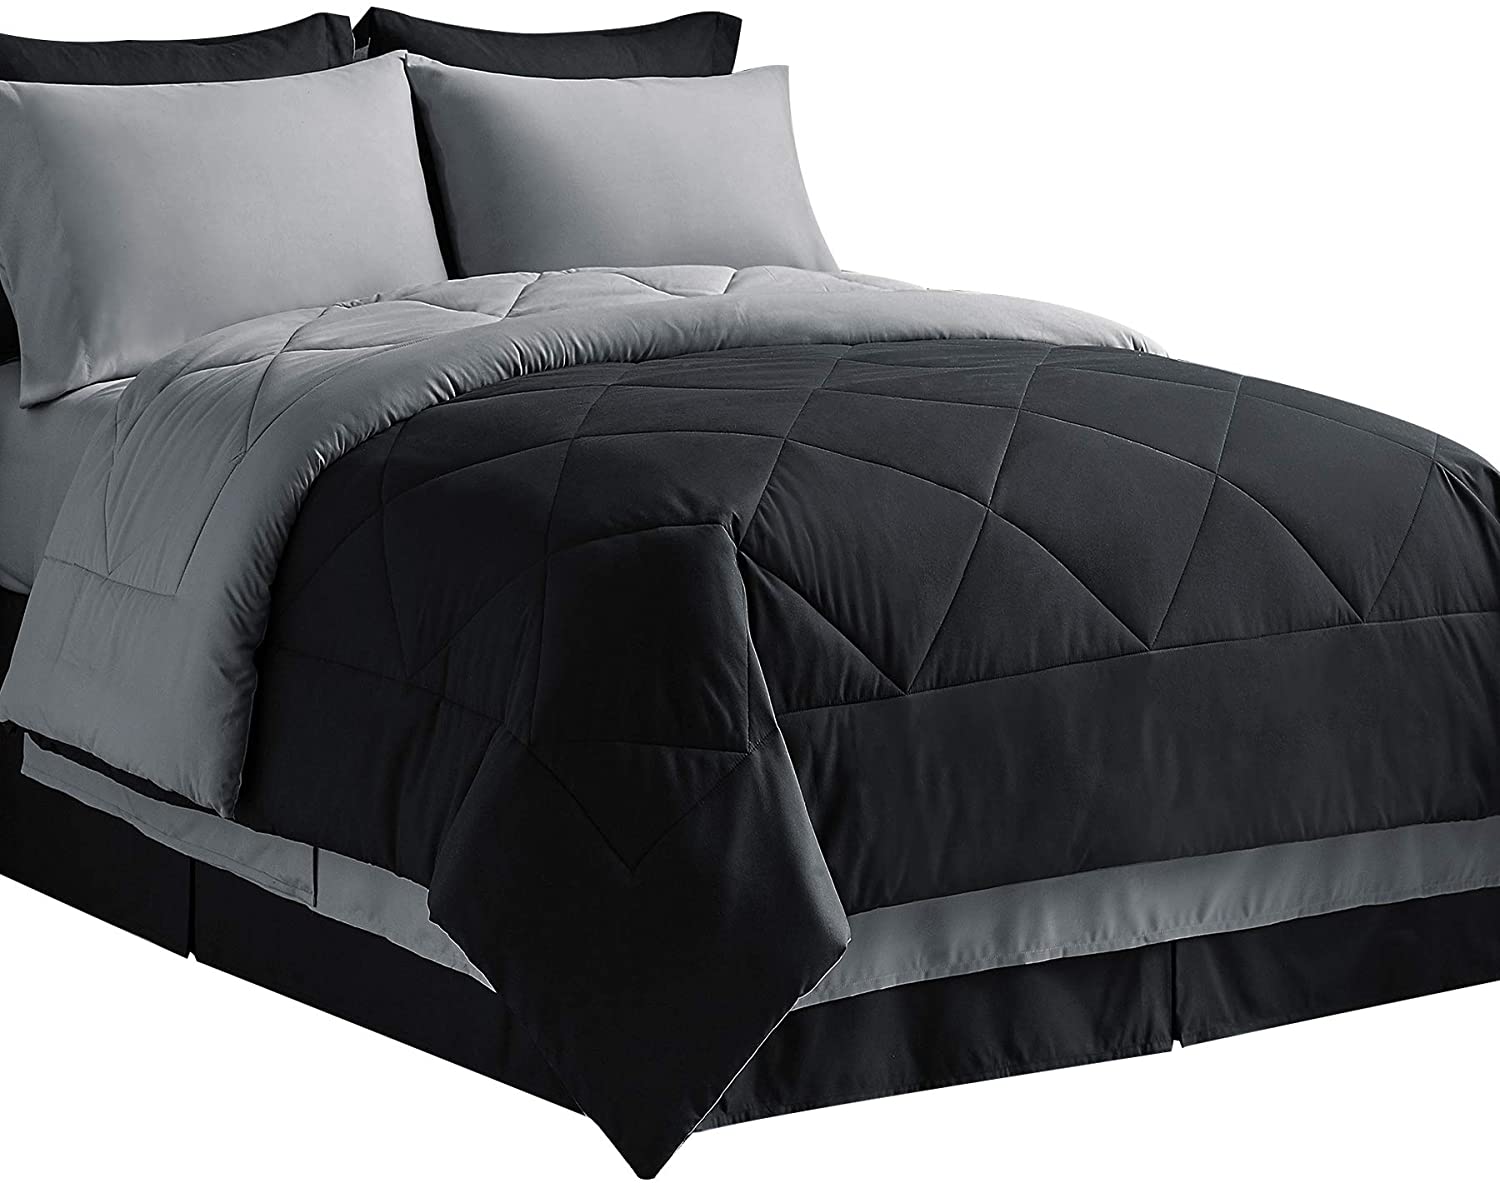 Bedsure Bed In A Bag Comforter Sets, Bed Comforter Sets Twin Xl